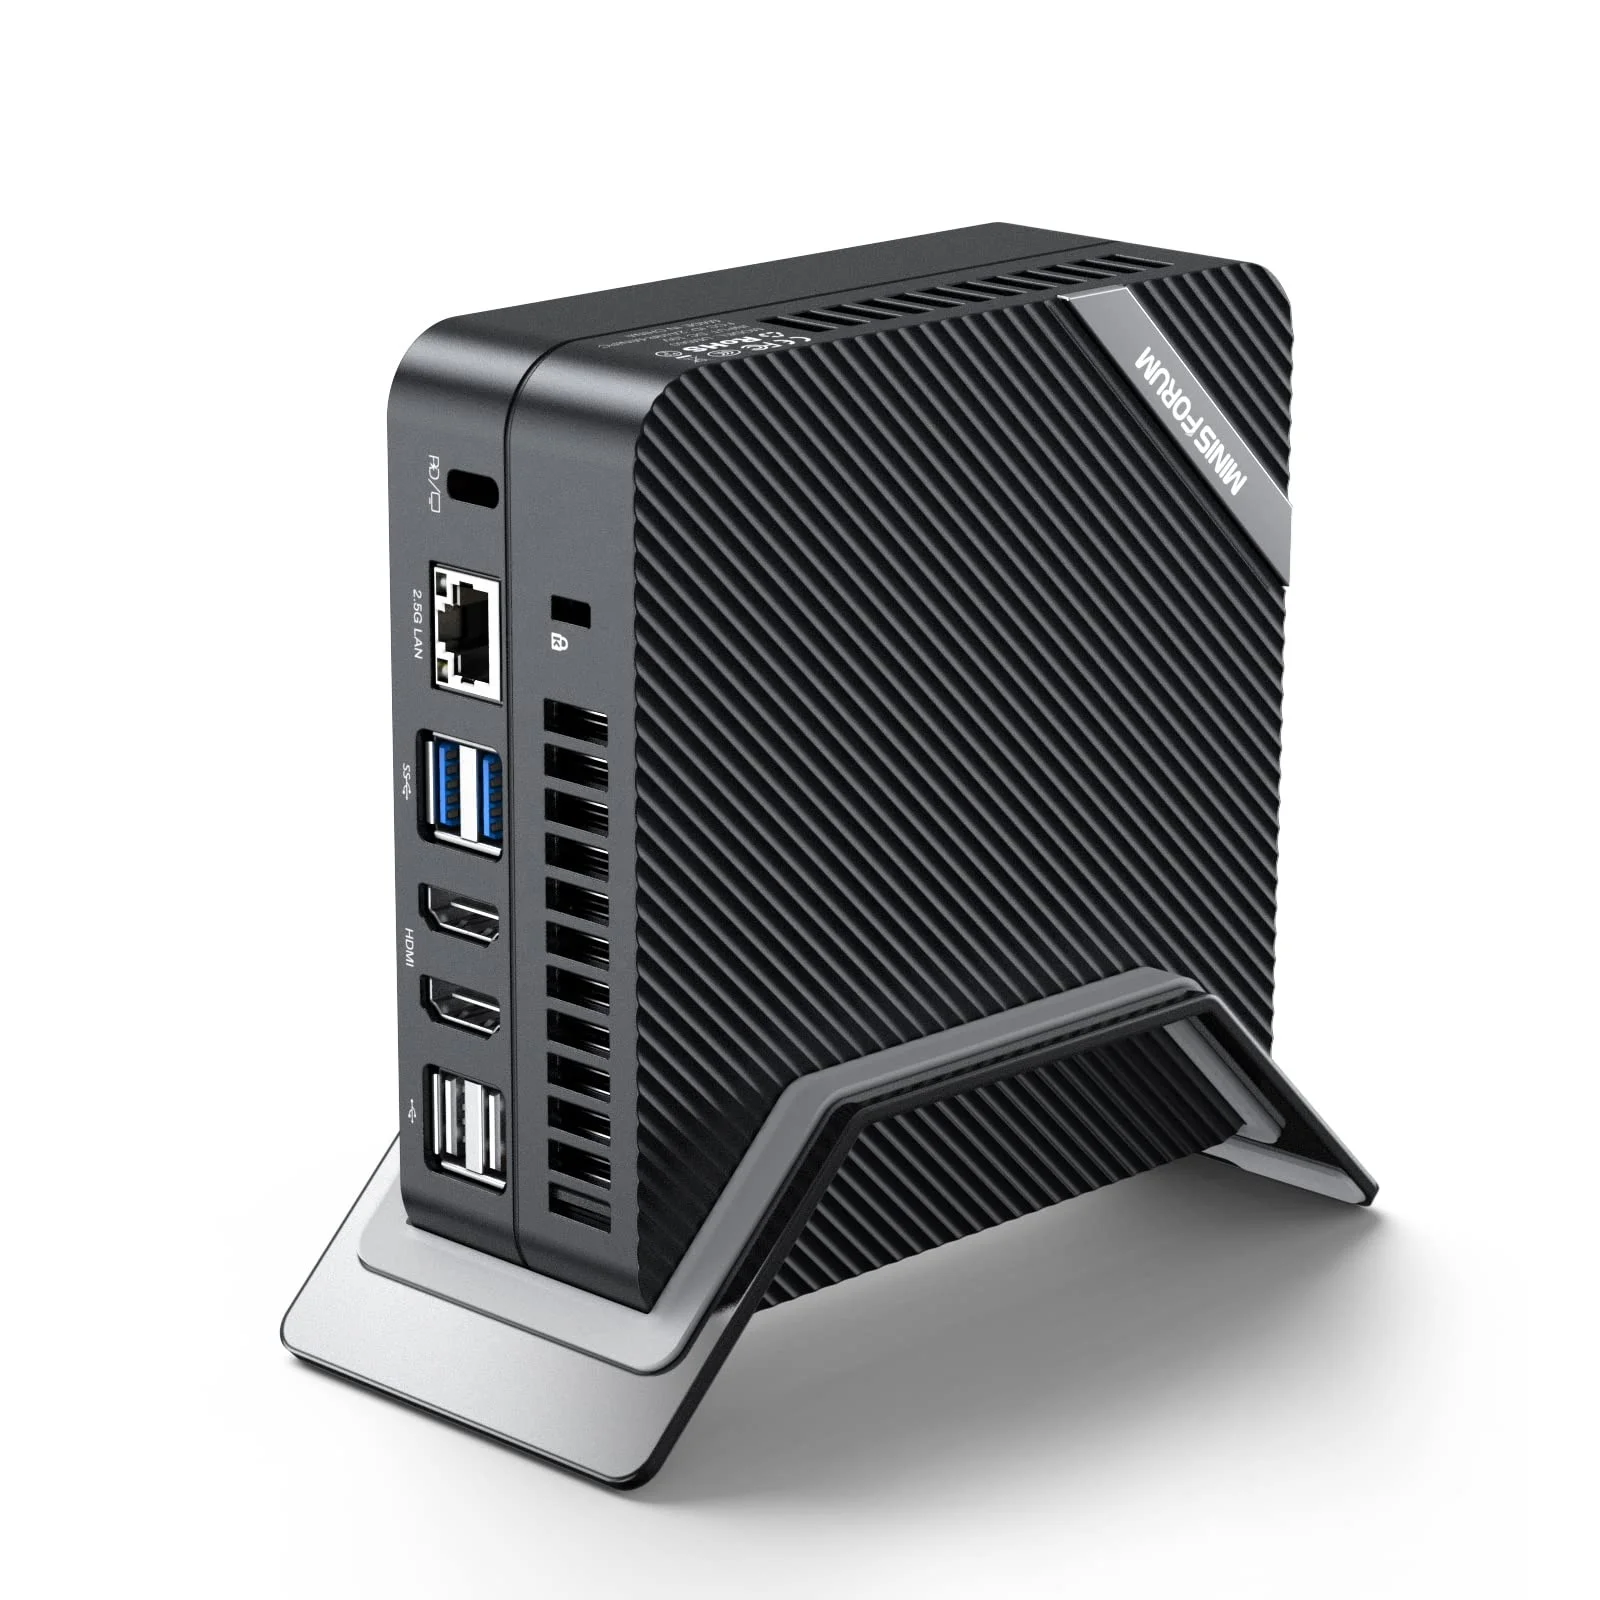 Minisforum announces UM690 mini PC with AMD Ryzen 9 6900HX processor and  USB4 connector -  News